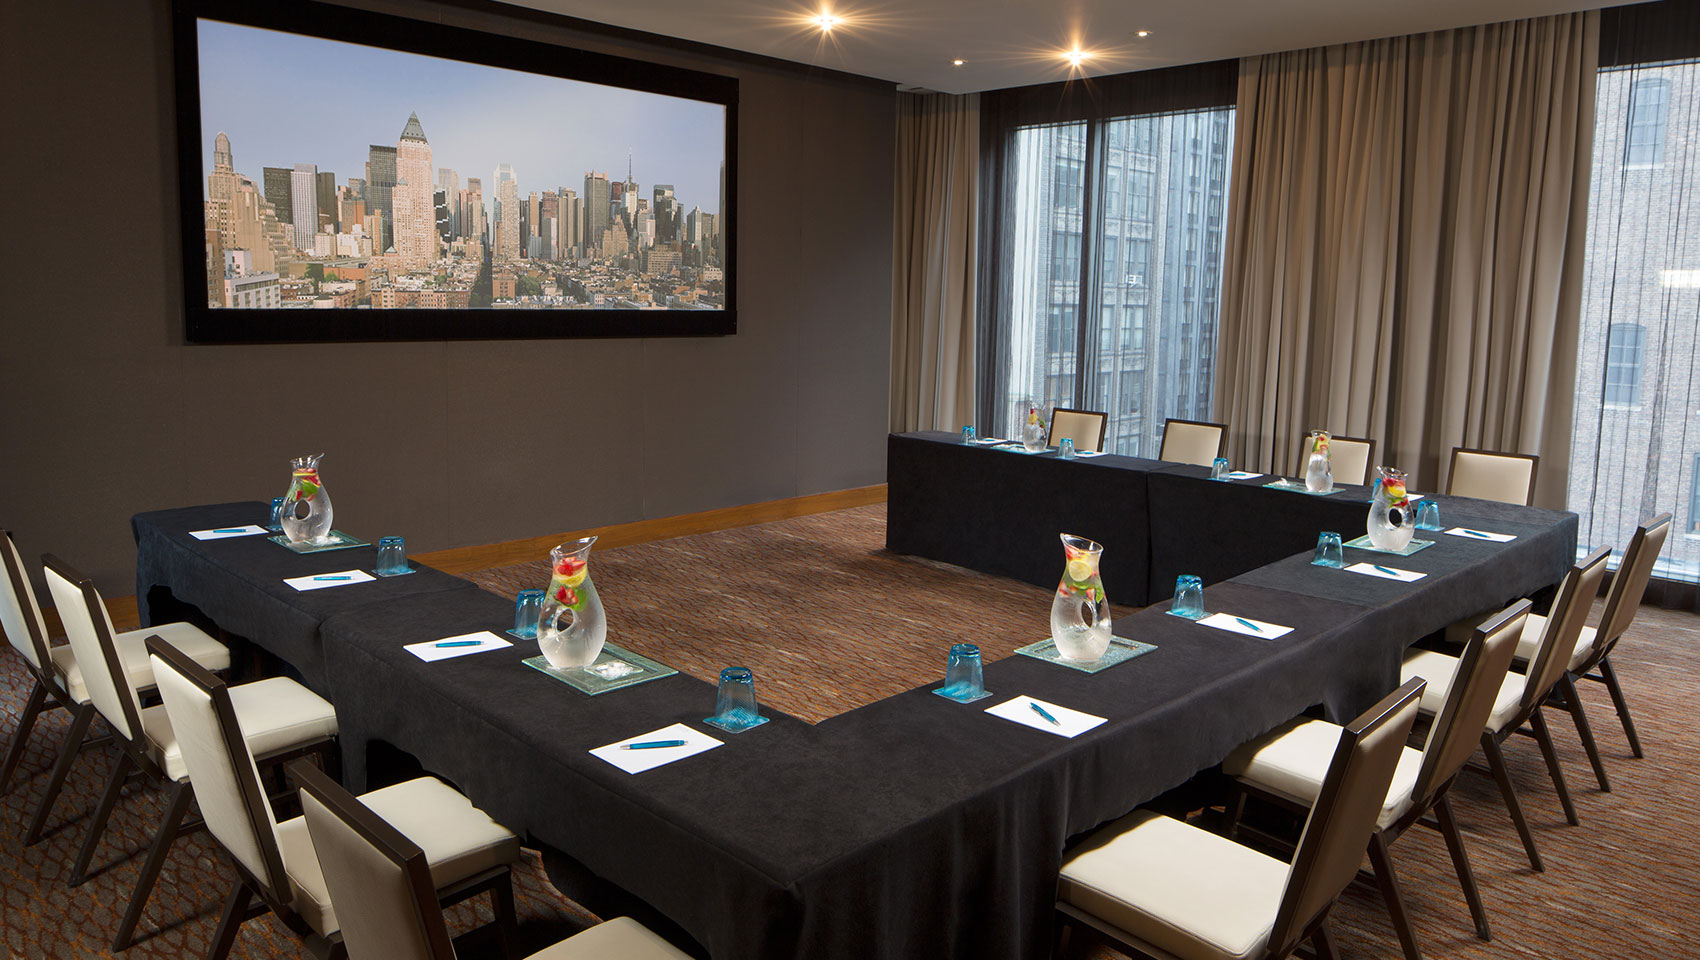 Screening room meeting with u-shape table set up facing towards large presenter screen